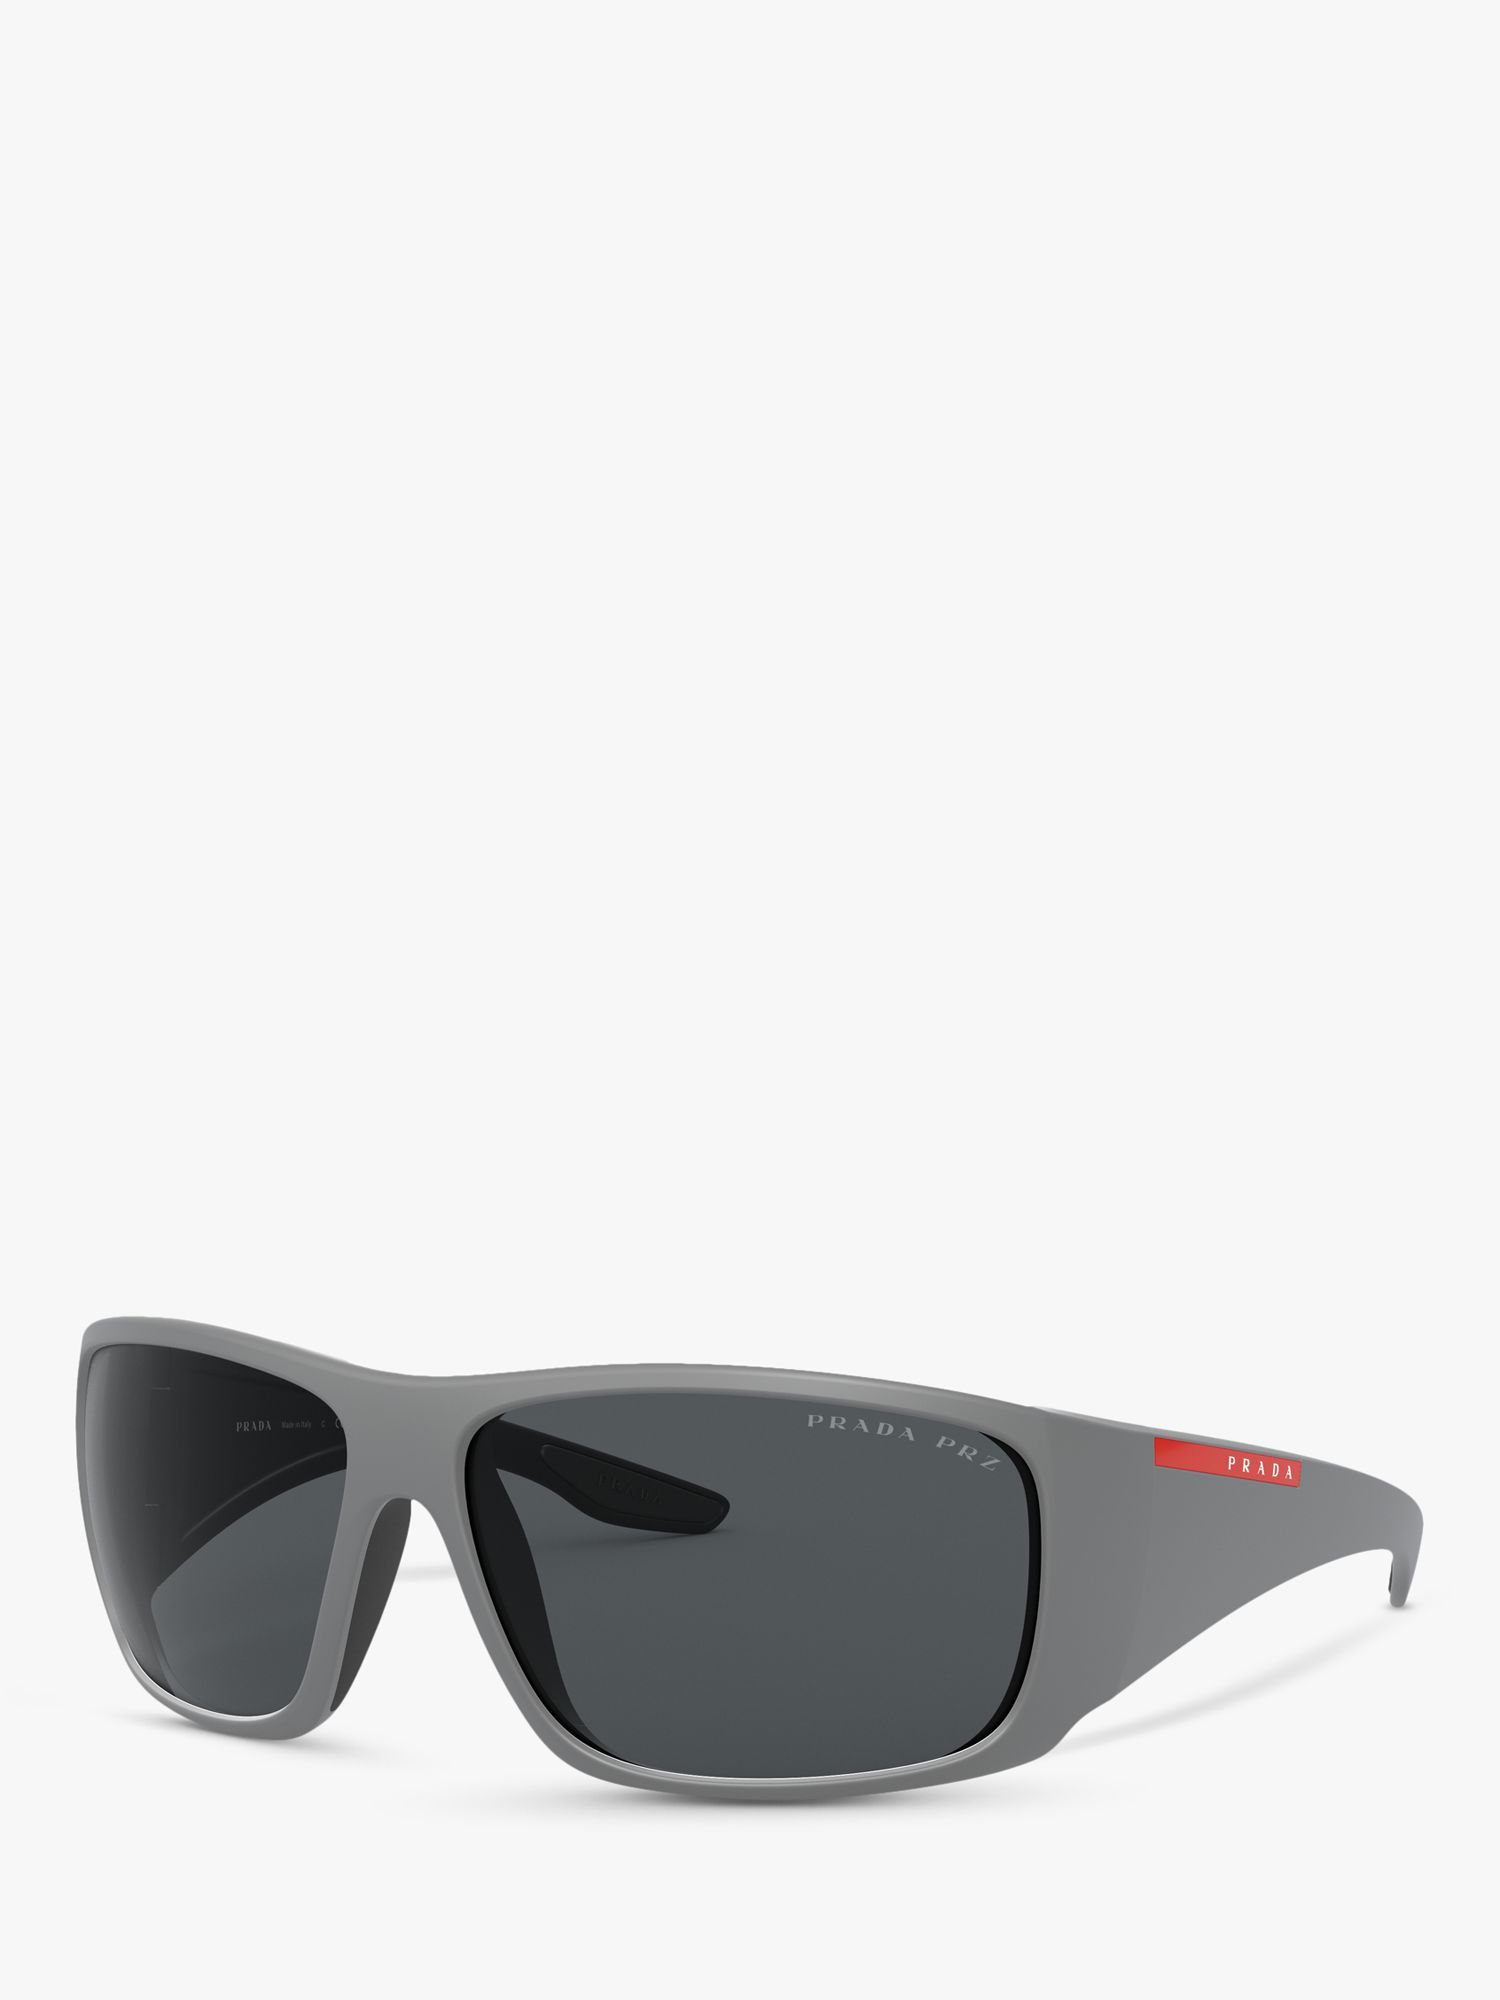 Prada Linea Rossa PS 04VS Men's Rectangular Sunglasses, Matte Light Grey/Grey at John Lewis 